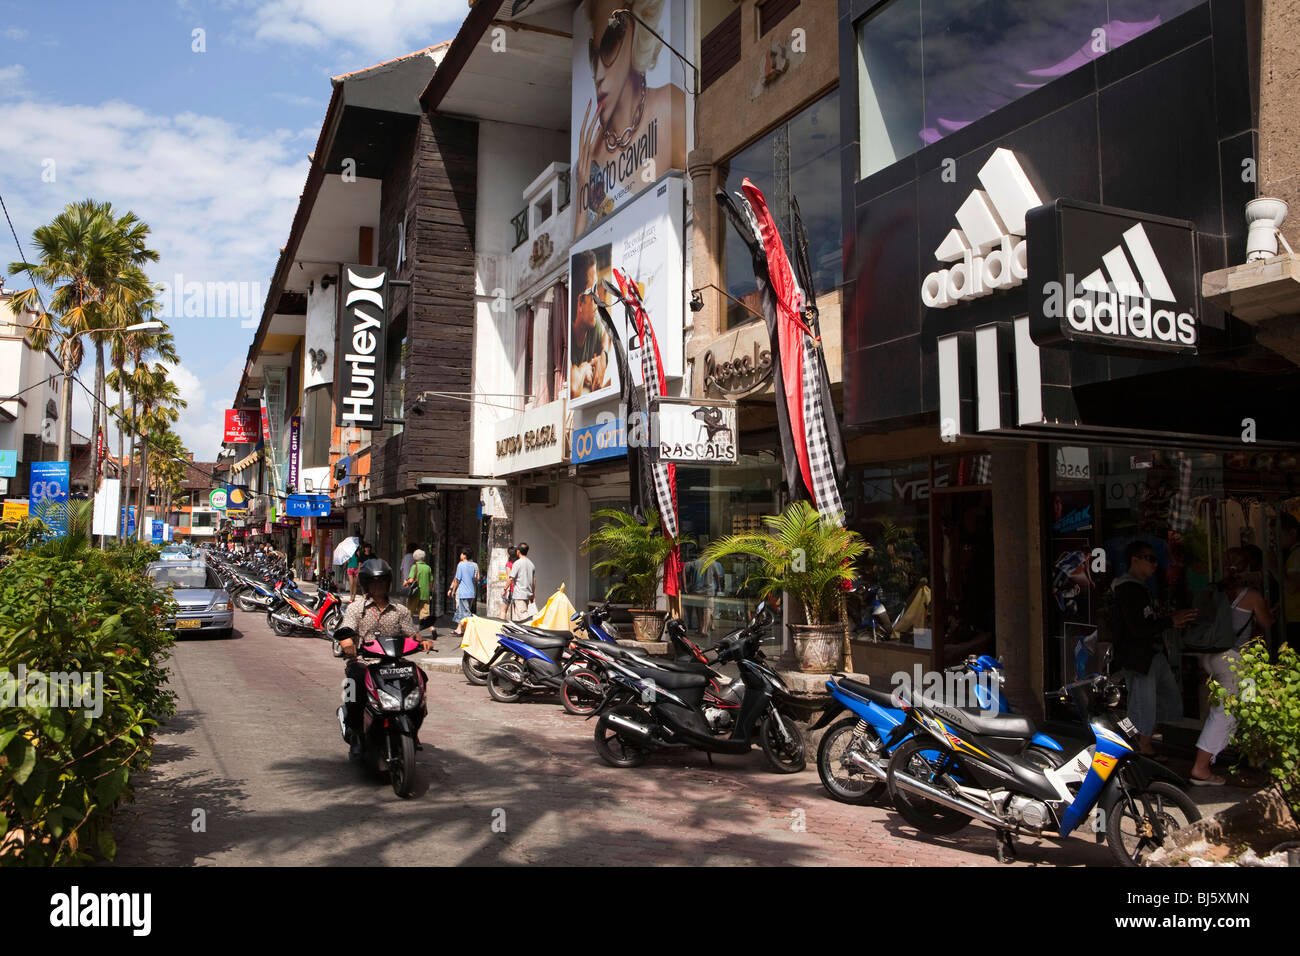 Indonesia, Kuta Square Shopping Complex, Adidas shop Fotografía stock - Alamy